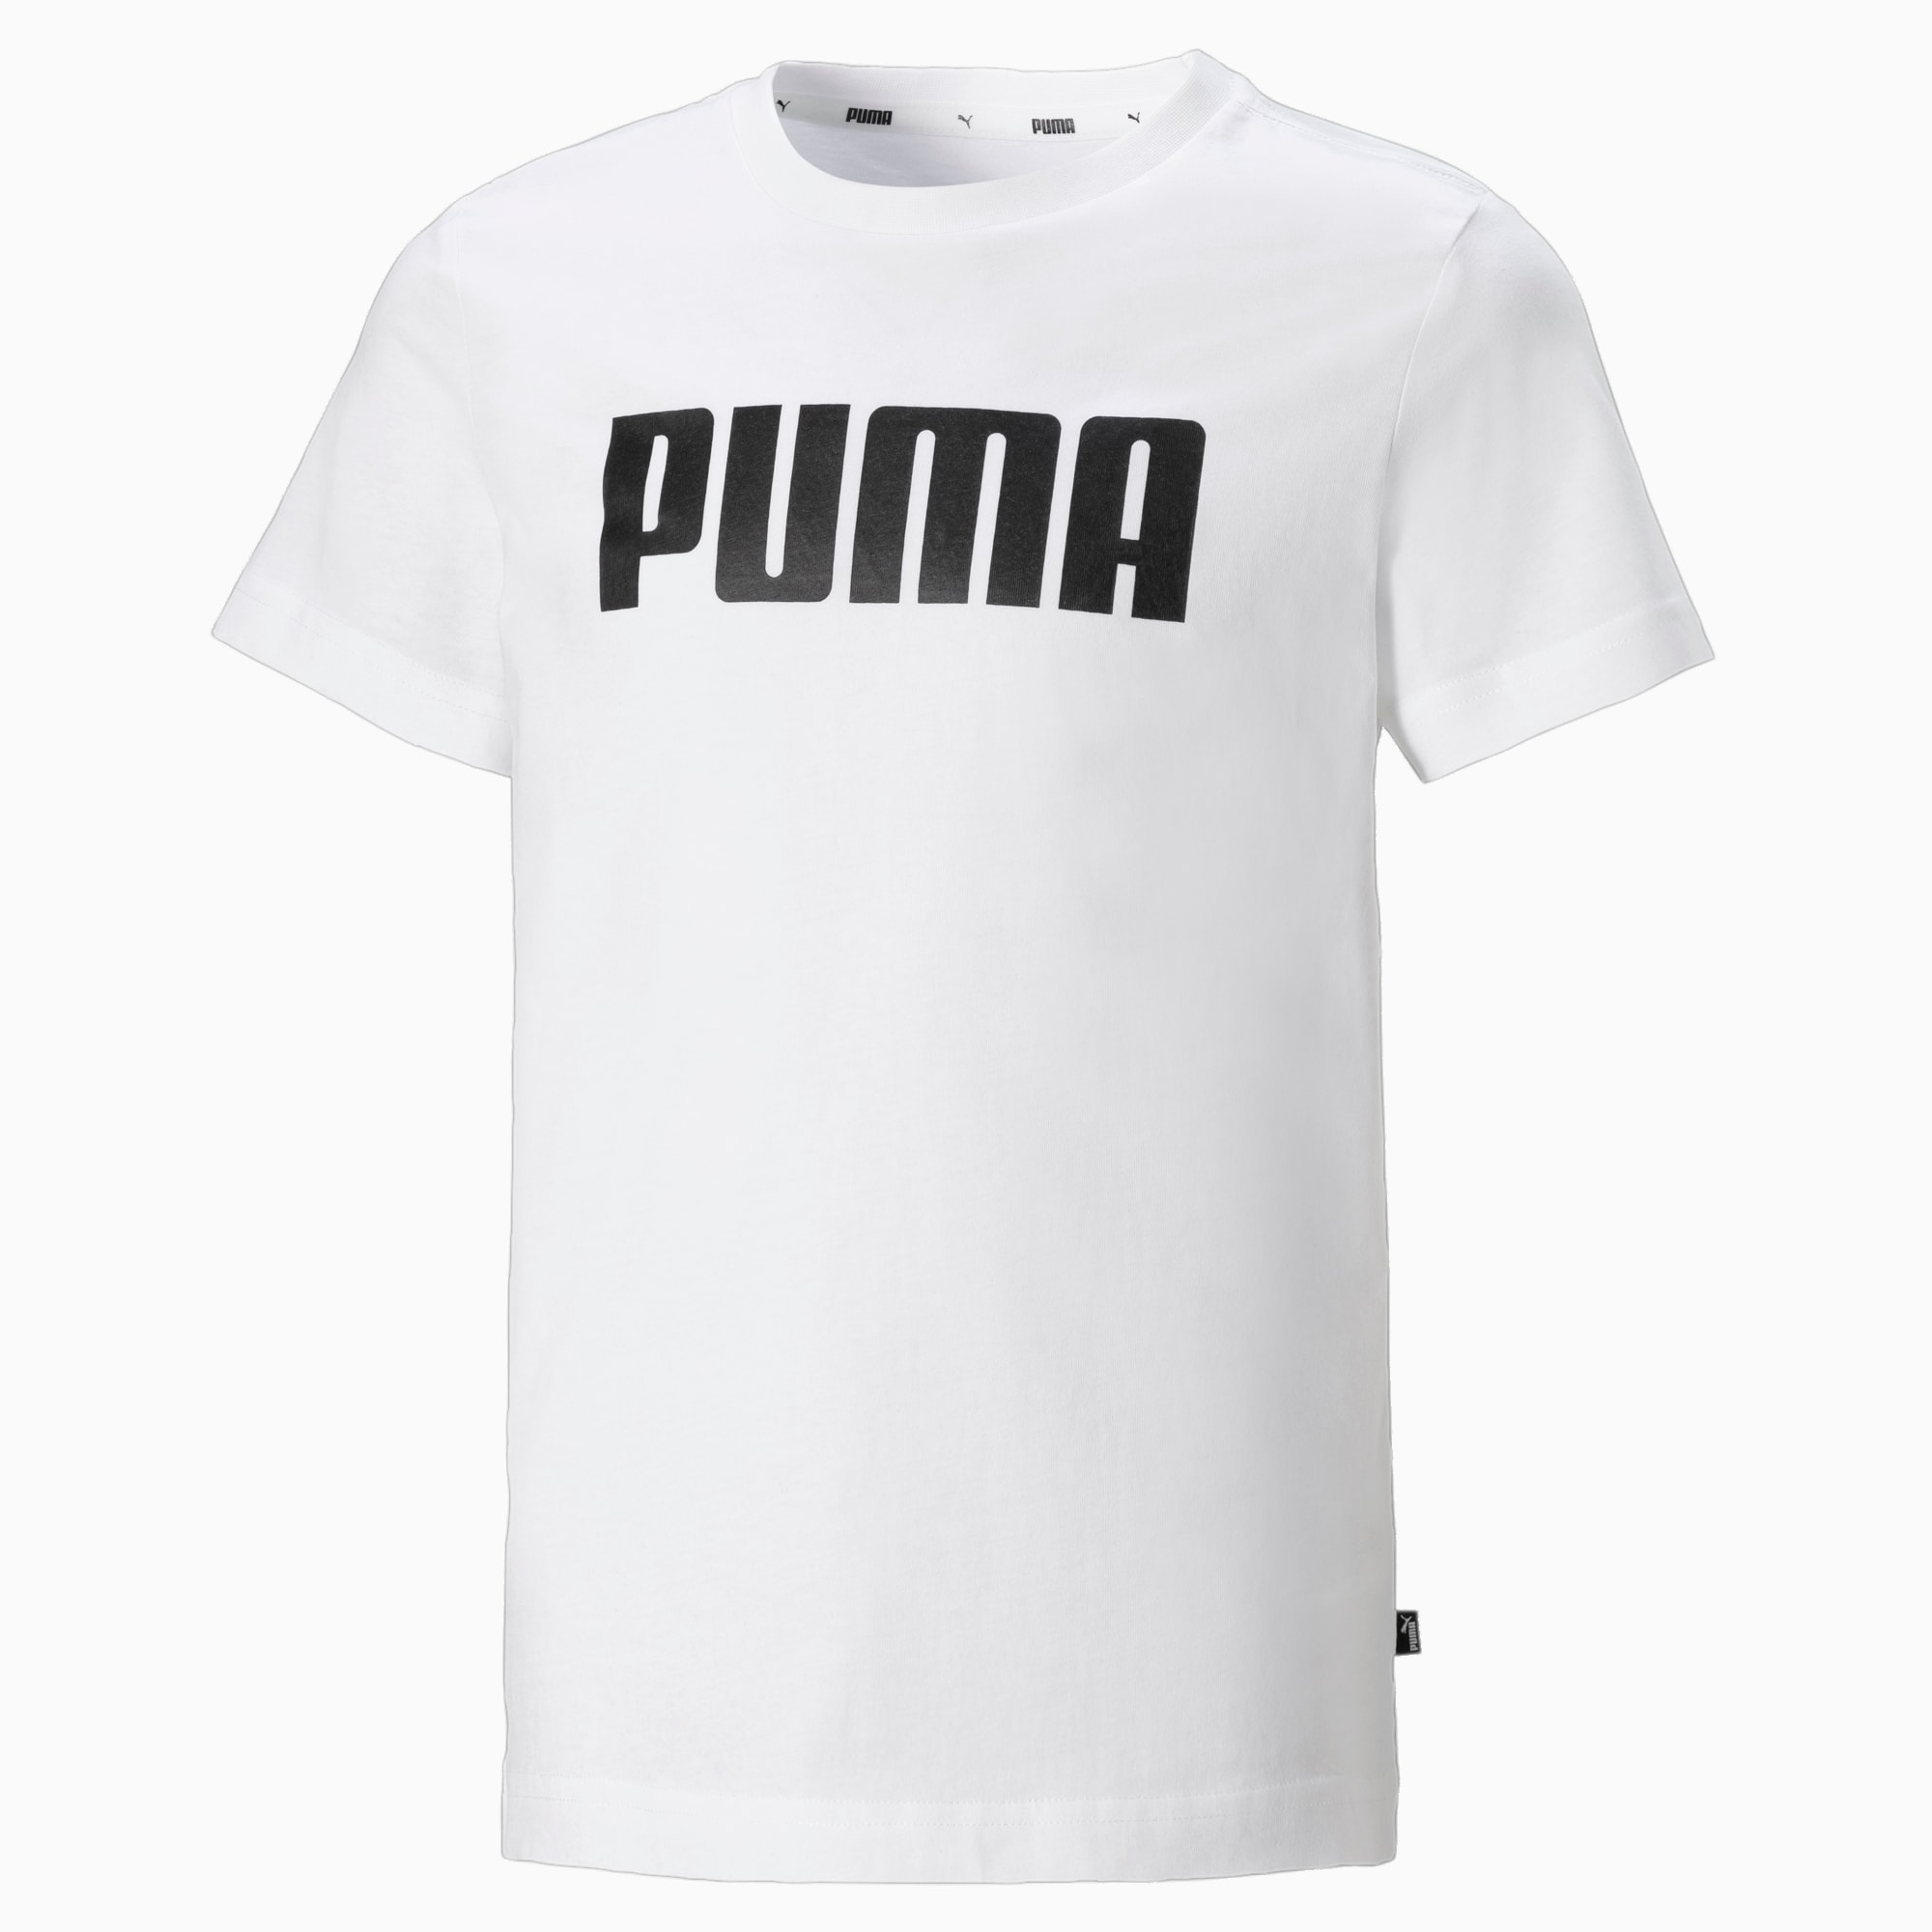 puma boys shirt